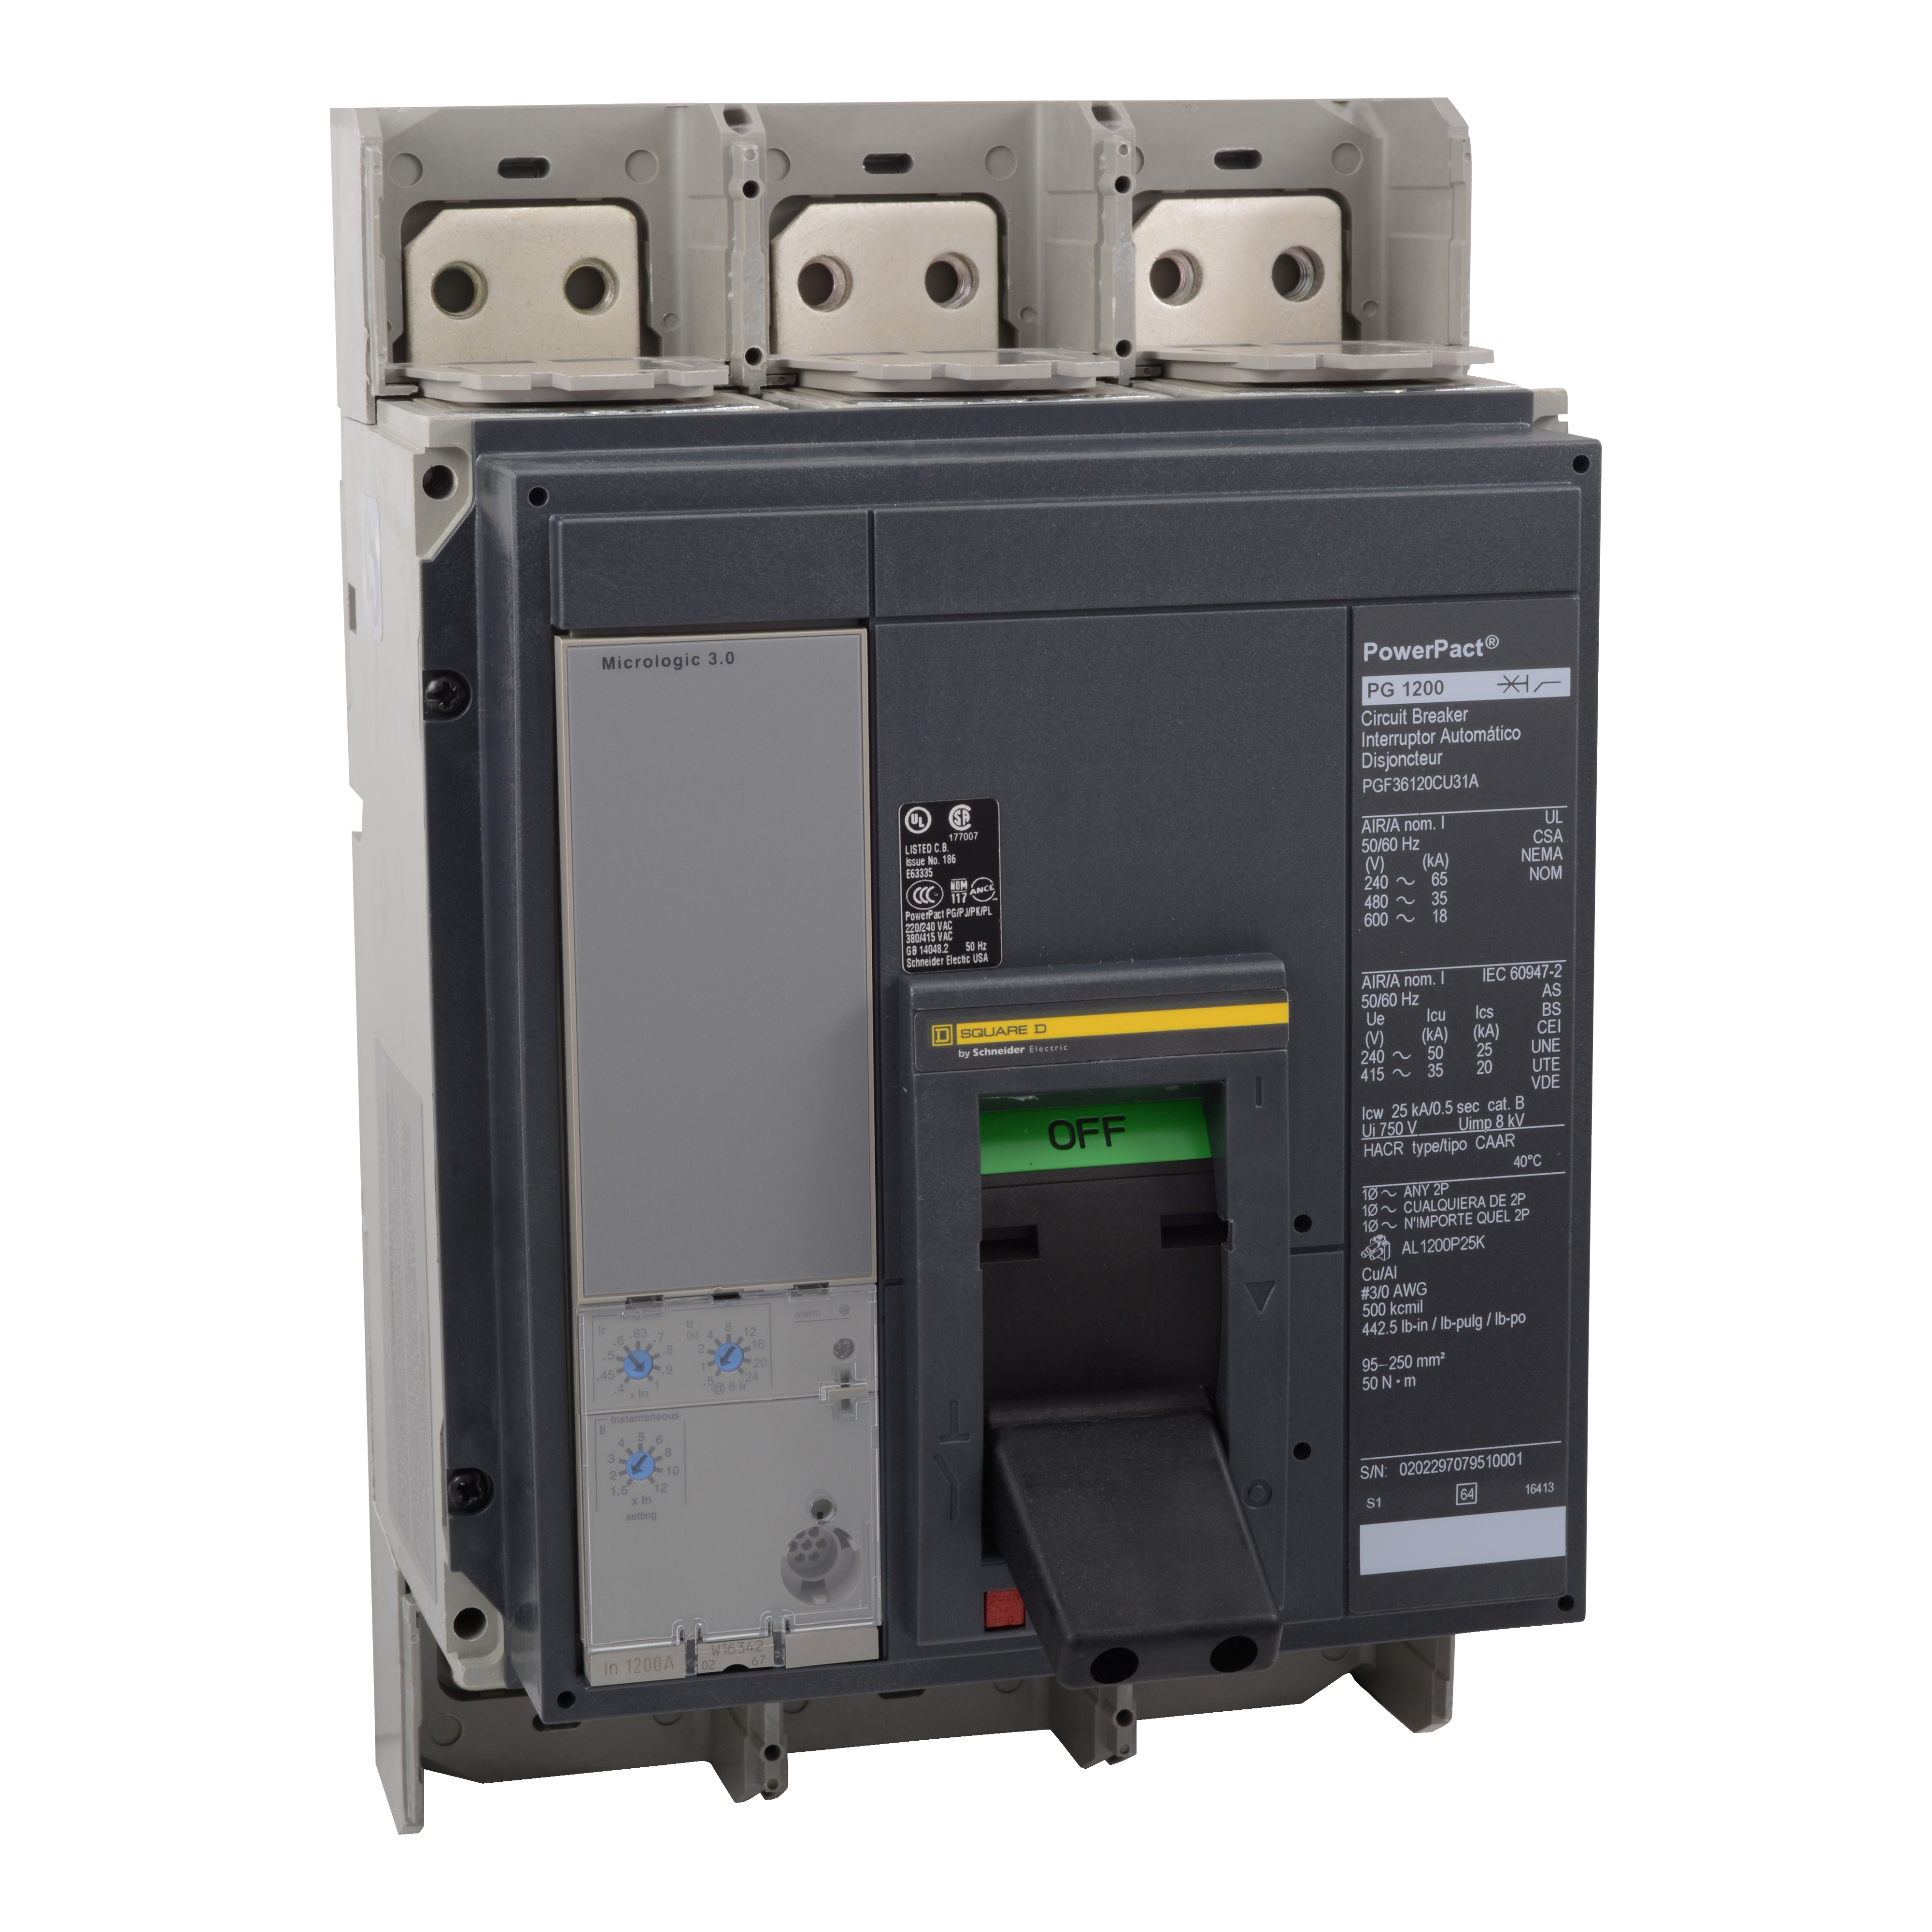 Circuit breaker, PowerPacT P, 600A, 3 pole, 600VAC, 65kA, busbar, Micrologic 5.0, 100%